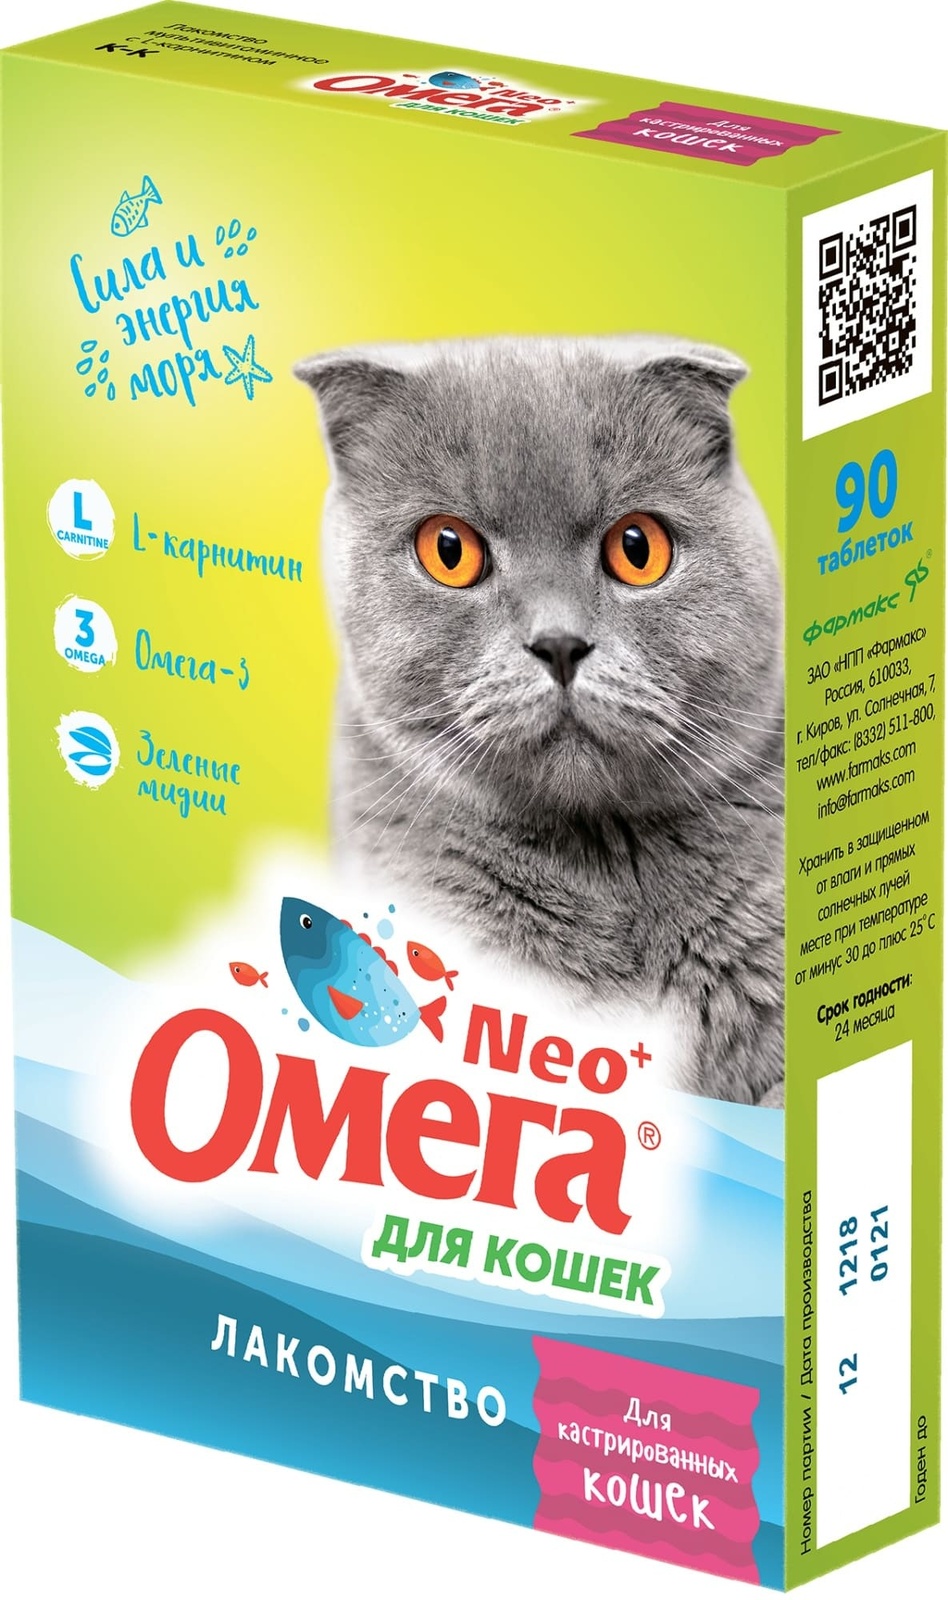 Фармакс Фармакс мультивитаминное лакомство Омега Neo+ Для кастрированных кошек с L-карнитином для кошек (60 г)